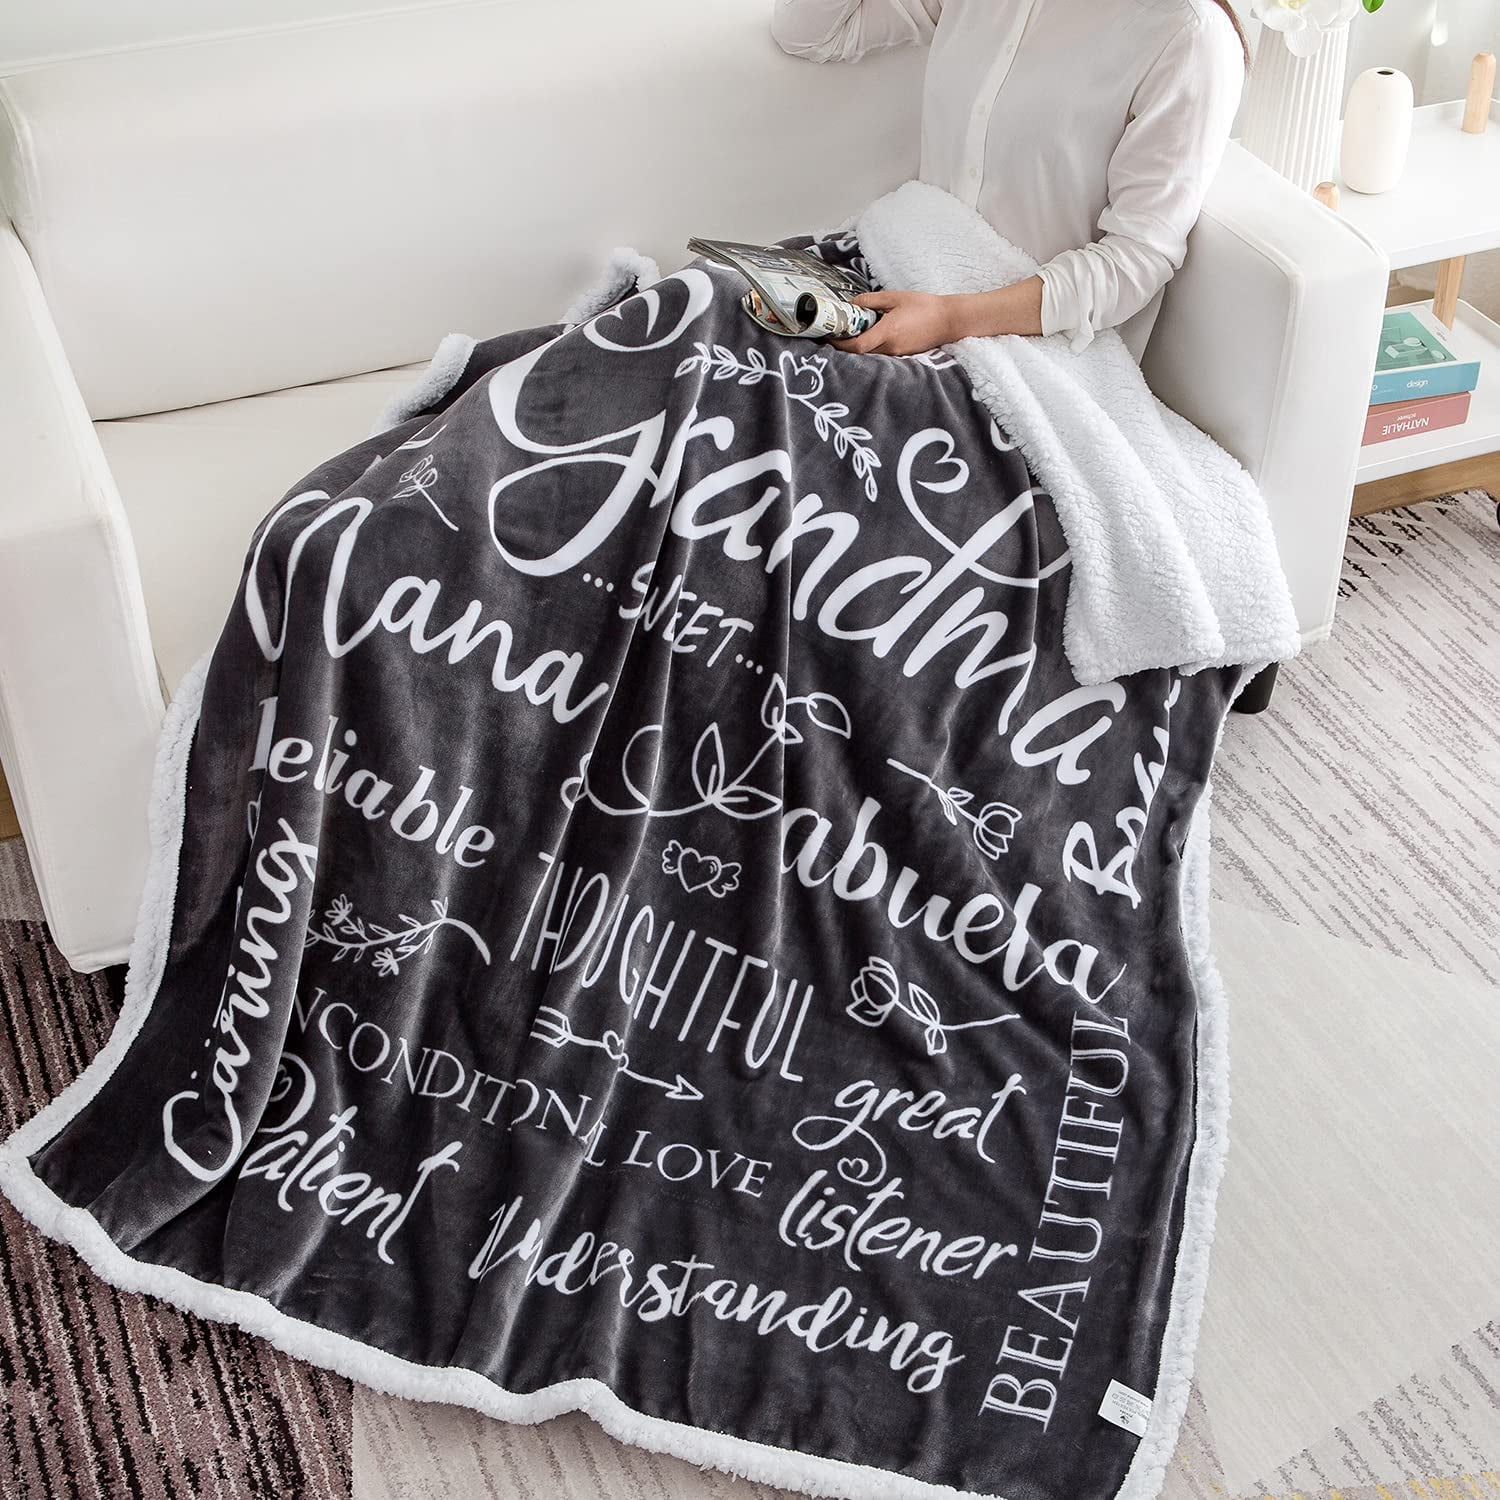 Flannel Blanket for Grandma - Red Throw Blankets - Personalised Gifts for  Grandma - Machine Washable Super Soft, Cosy Grandma Blanket, Birthday Gifts  for Grandma